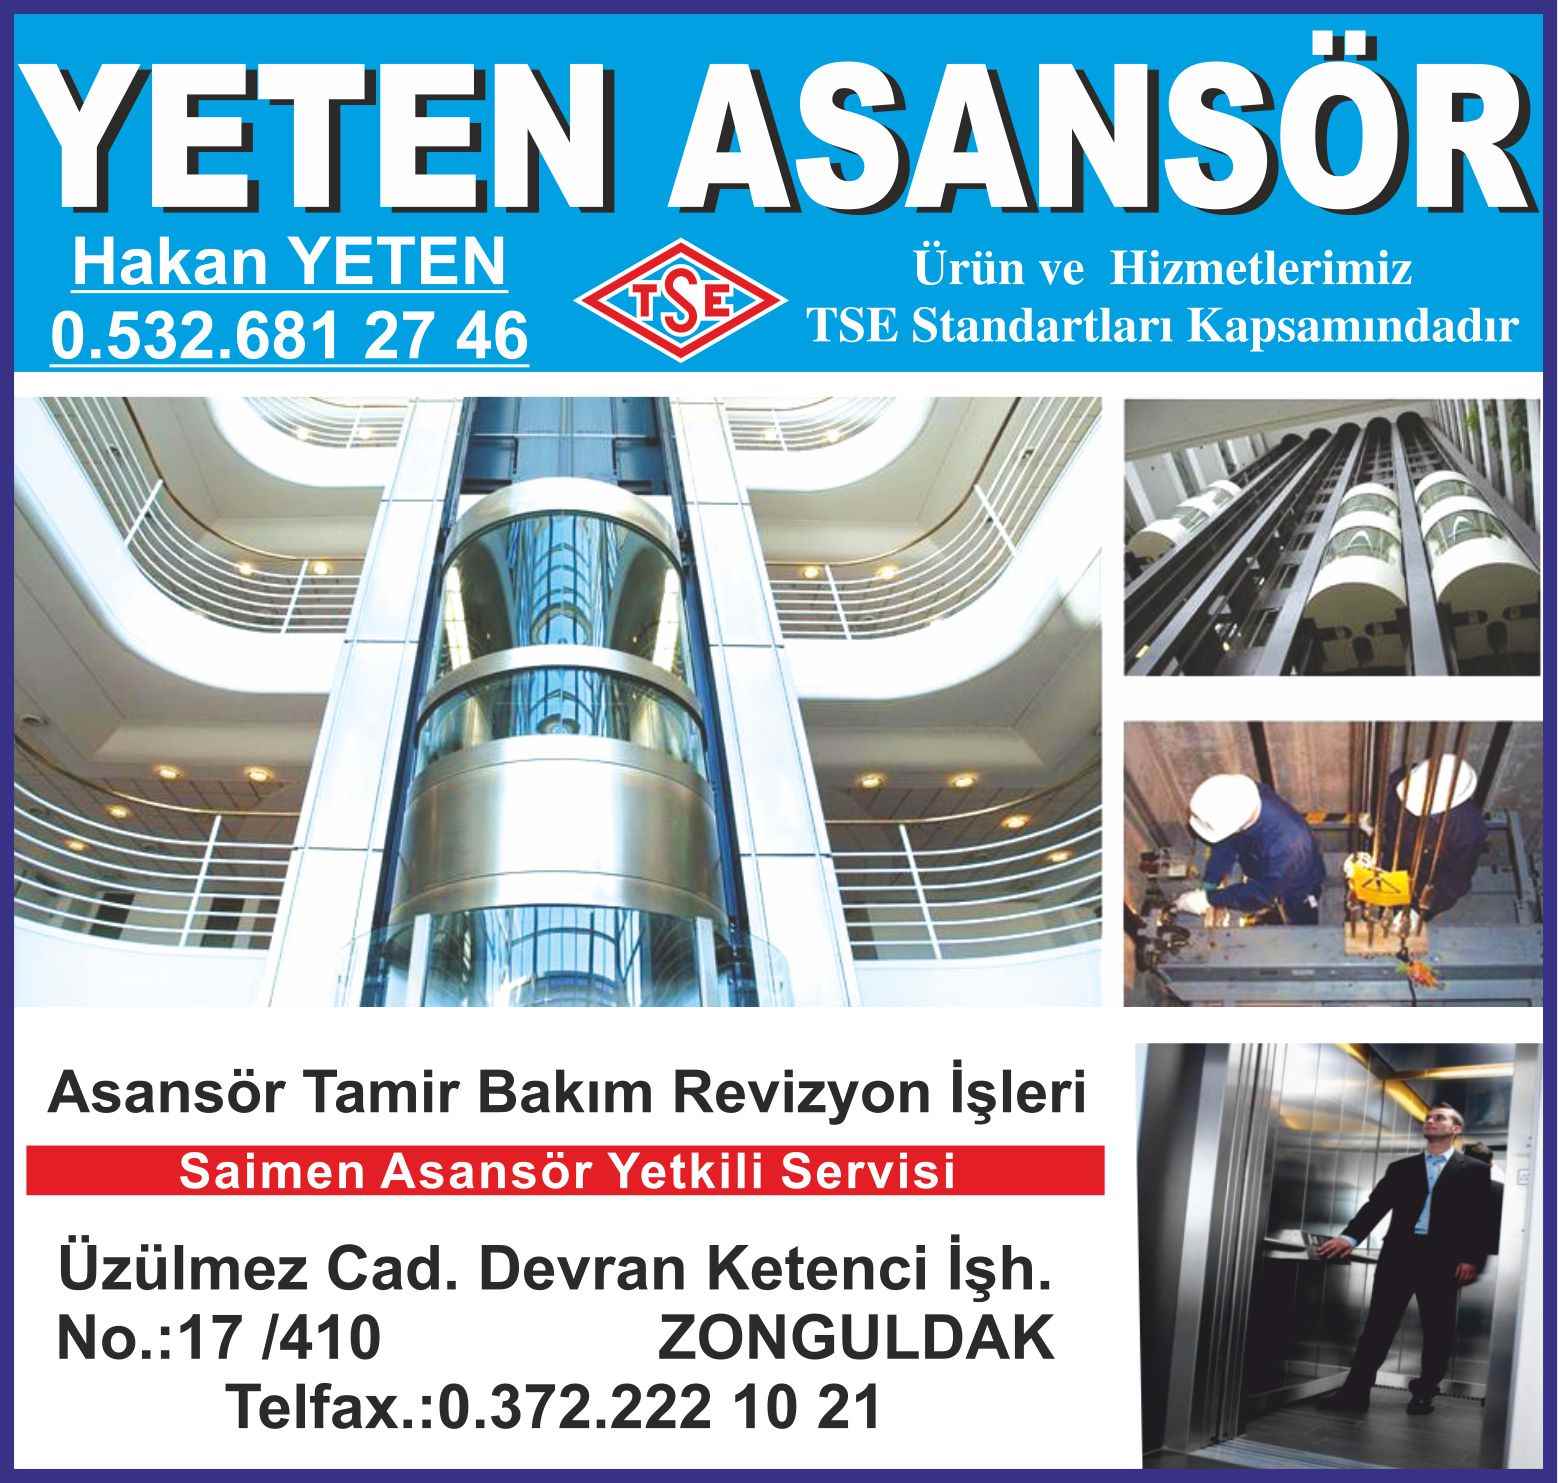 Yeten Asansör Zonguldak